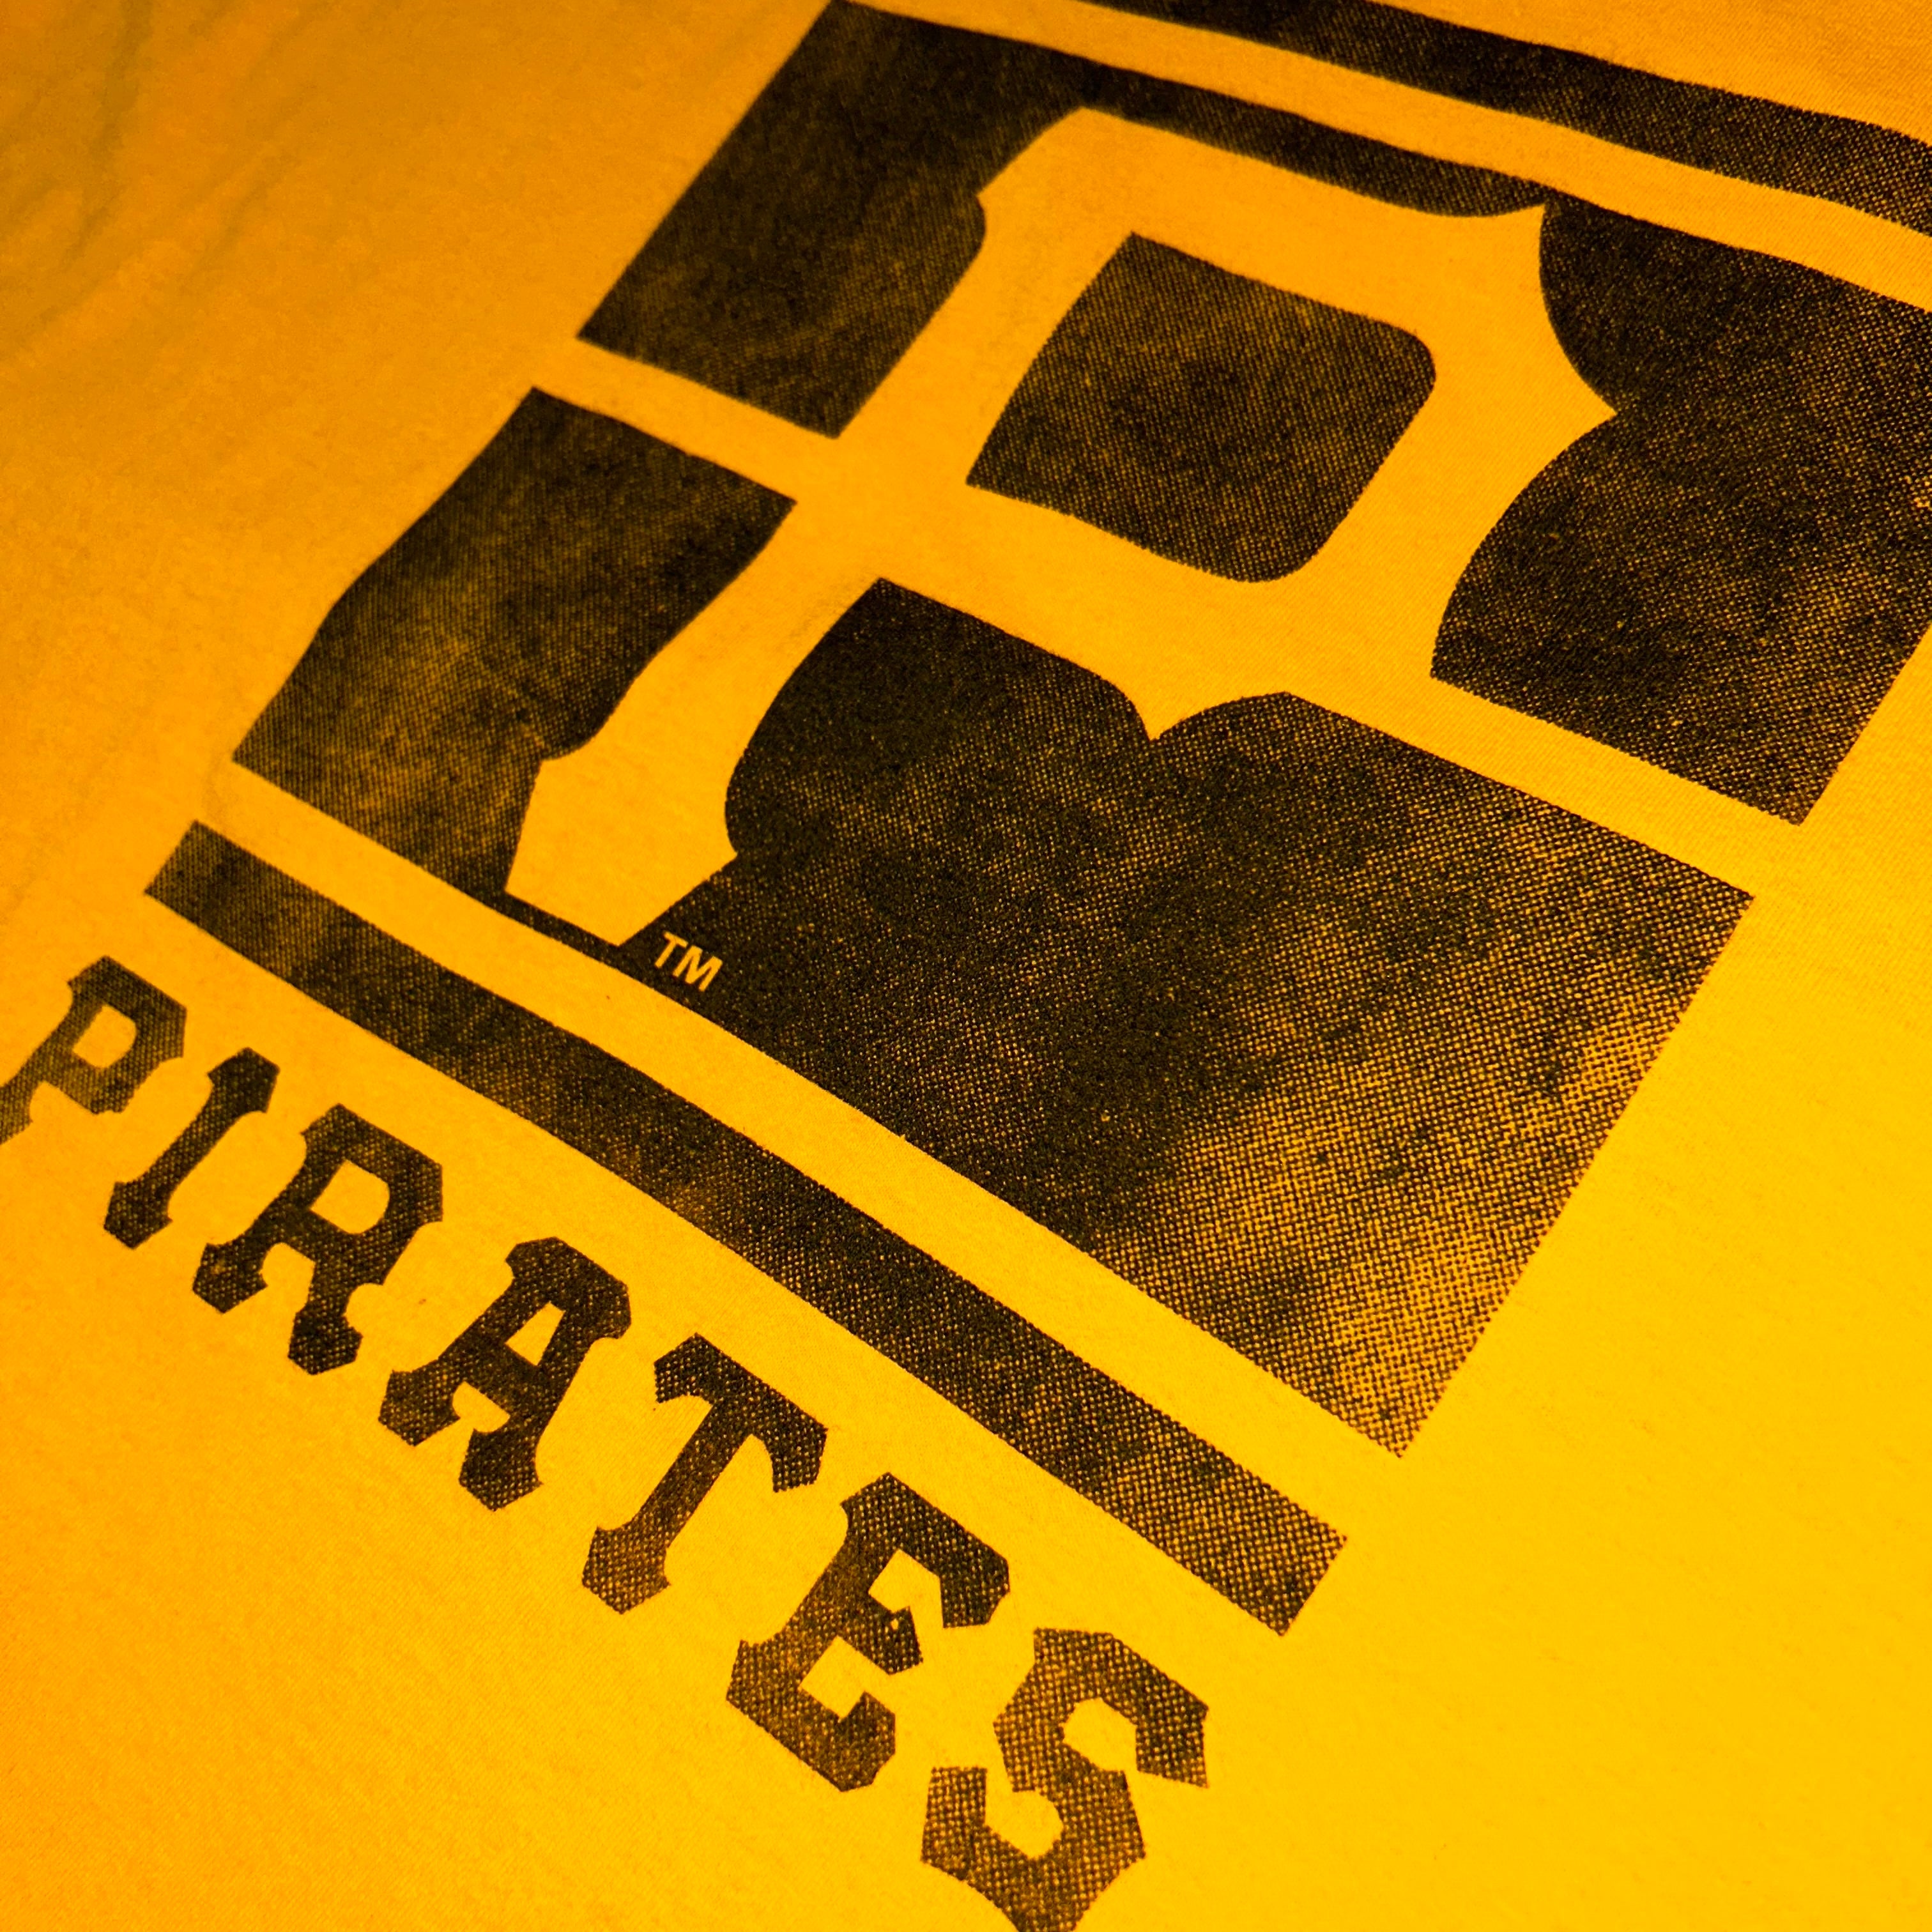 T-shirt Pirates Vintage  (XL)